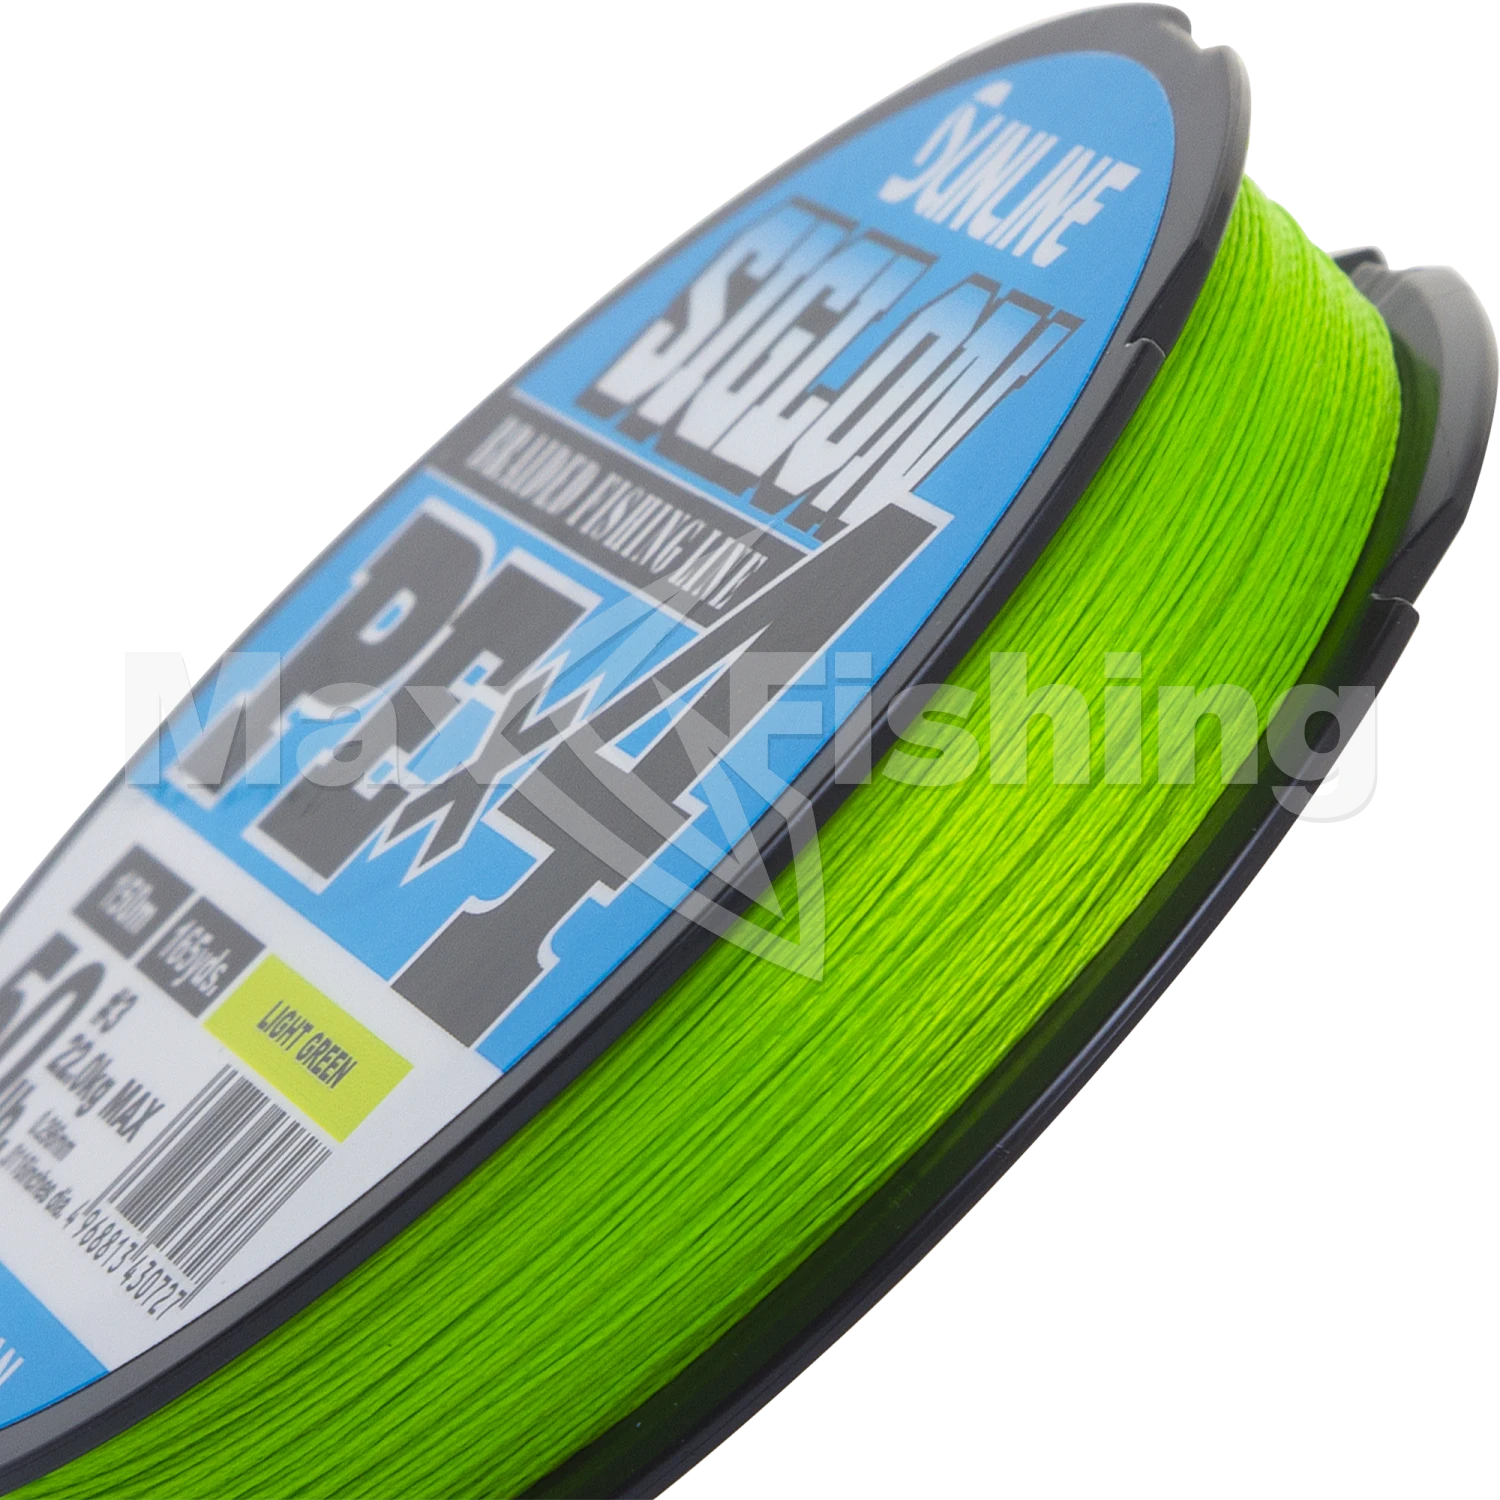 Шнур плетеный Sunline Siglon PE X4 #3,0 0,296мм 150м (light green)